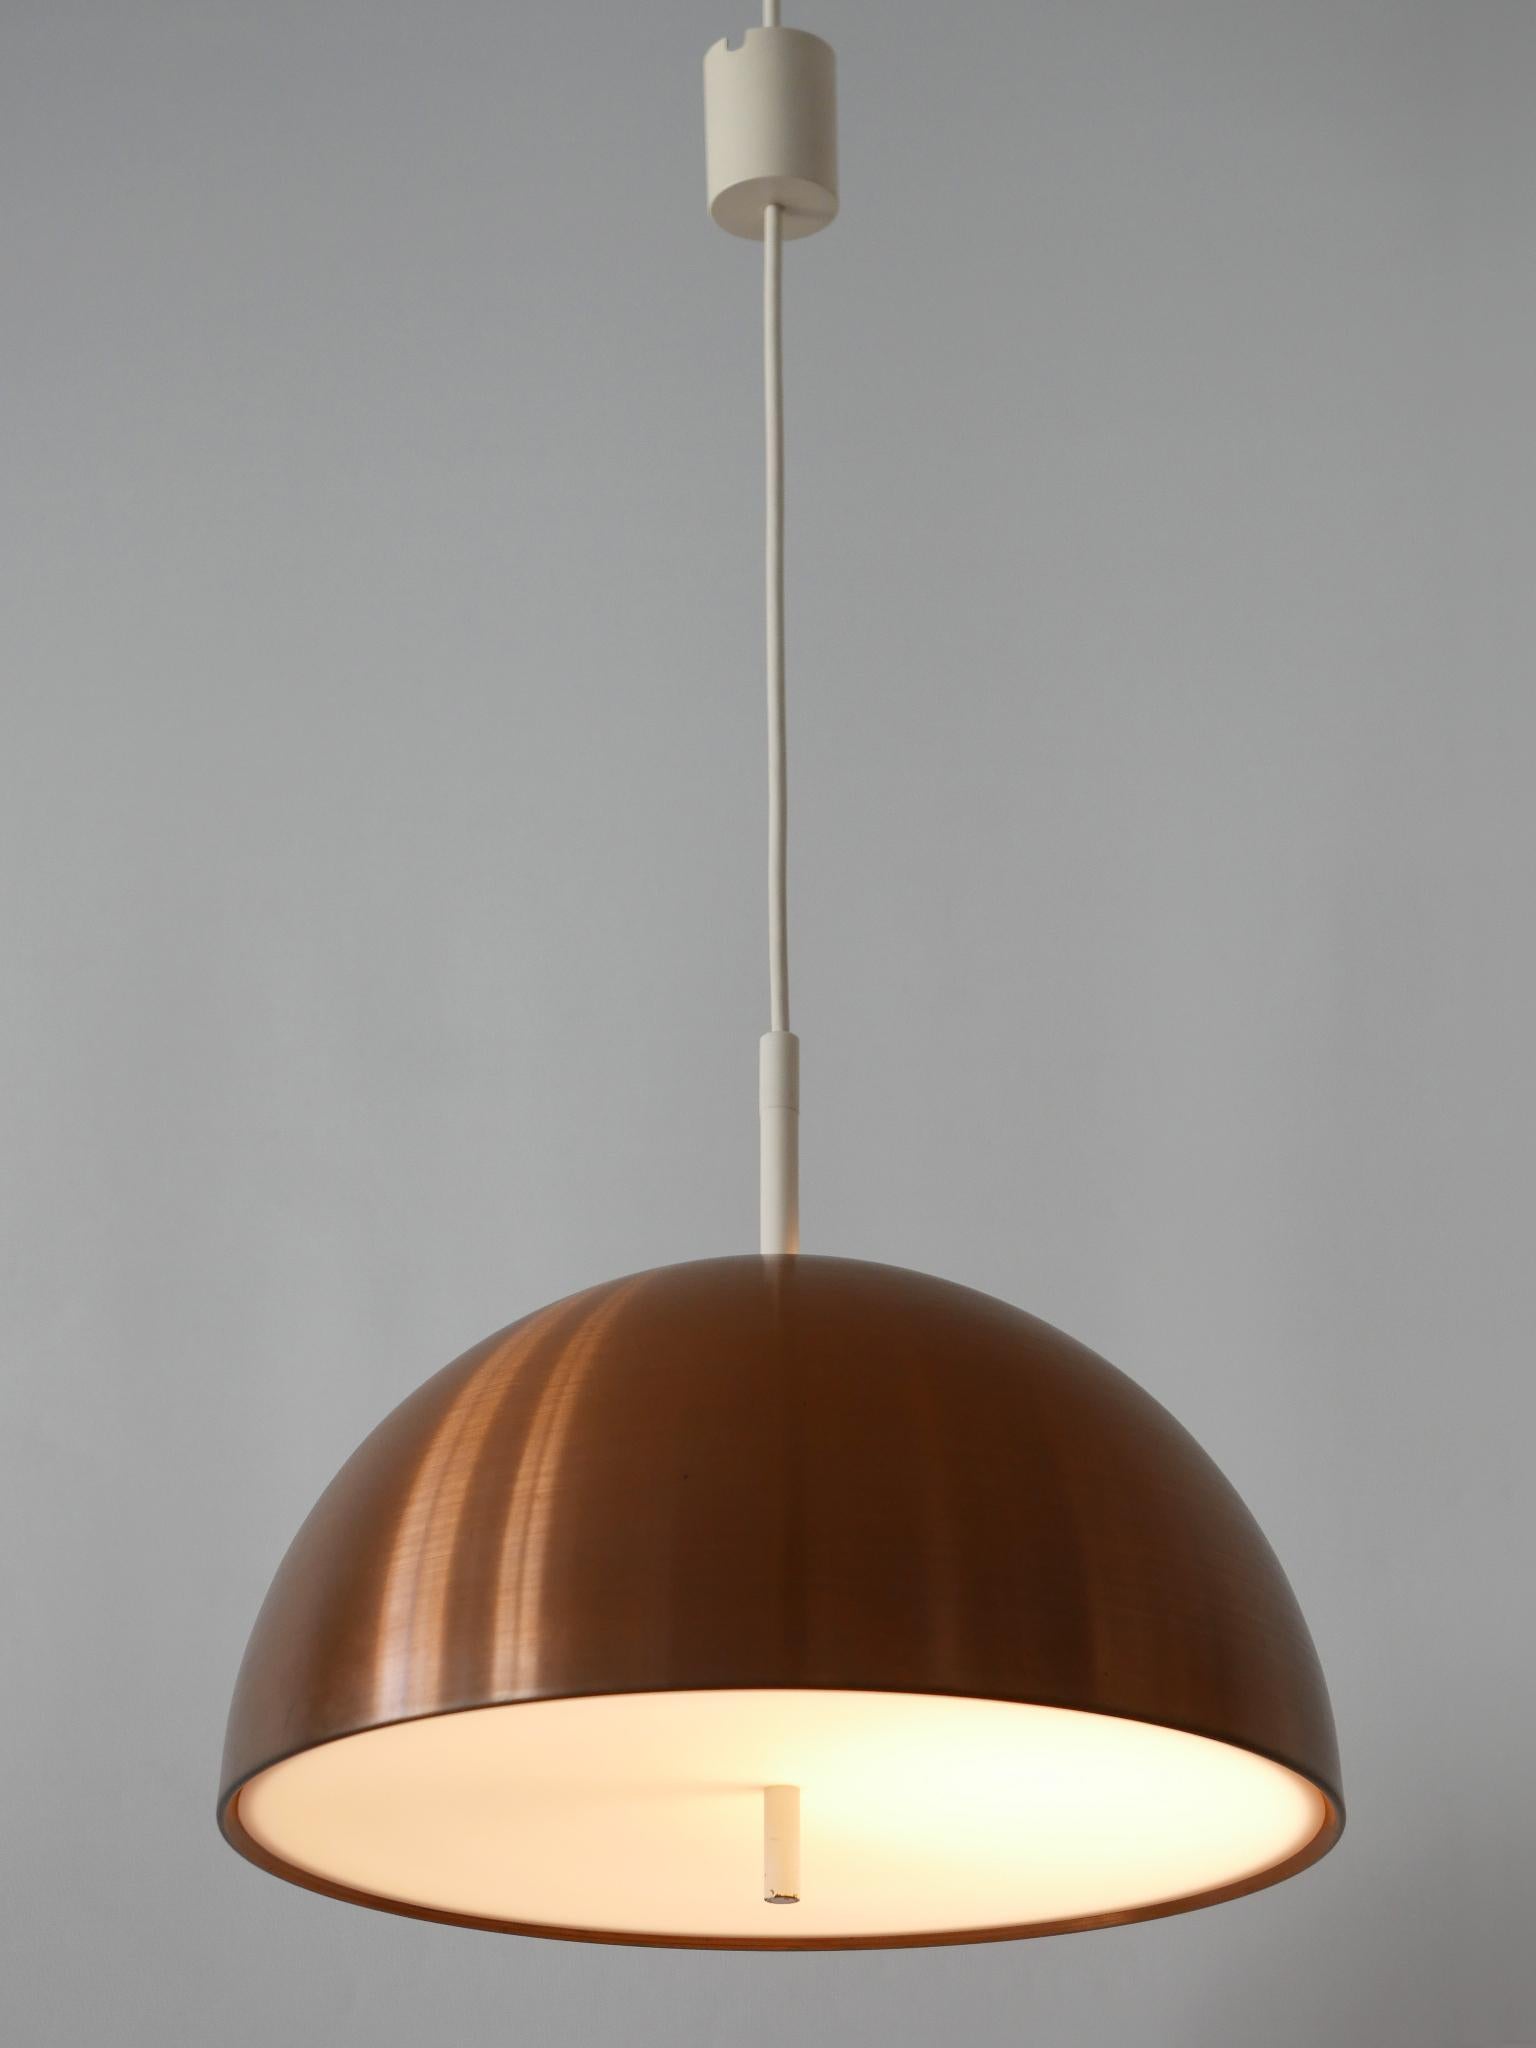 Elegant Mid-Century Modern Copper Pendant Lamp by Staff & Schwarz Germany, 1960s For Sale 11